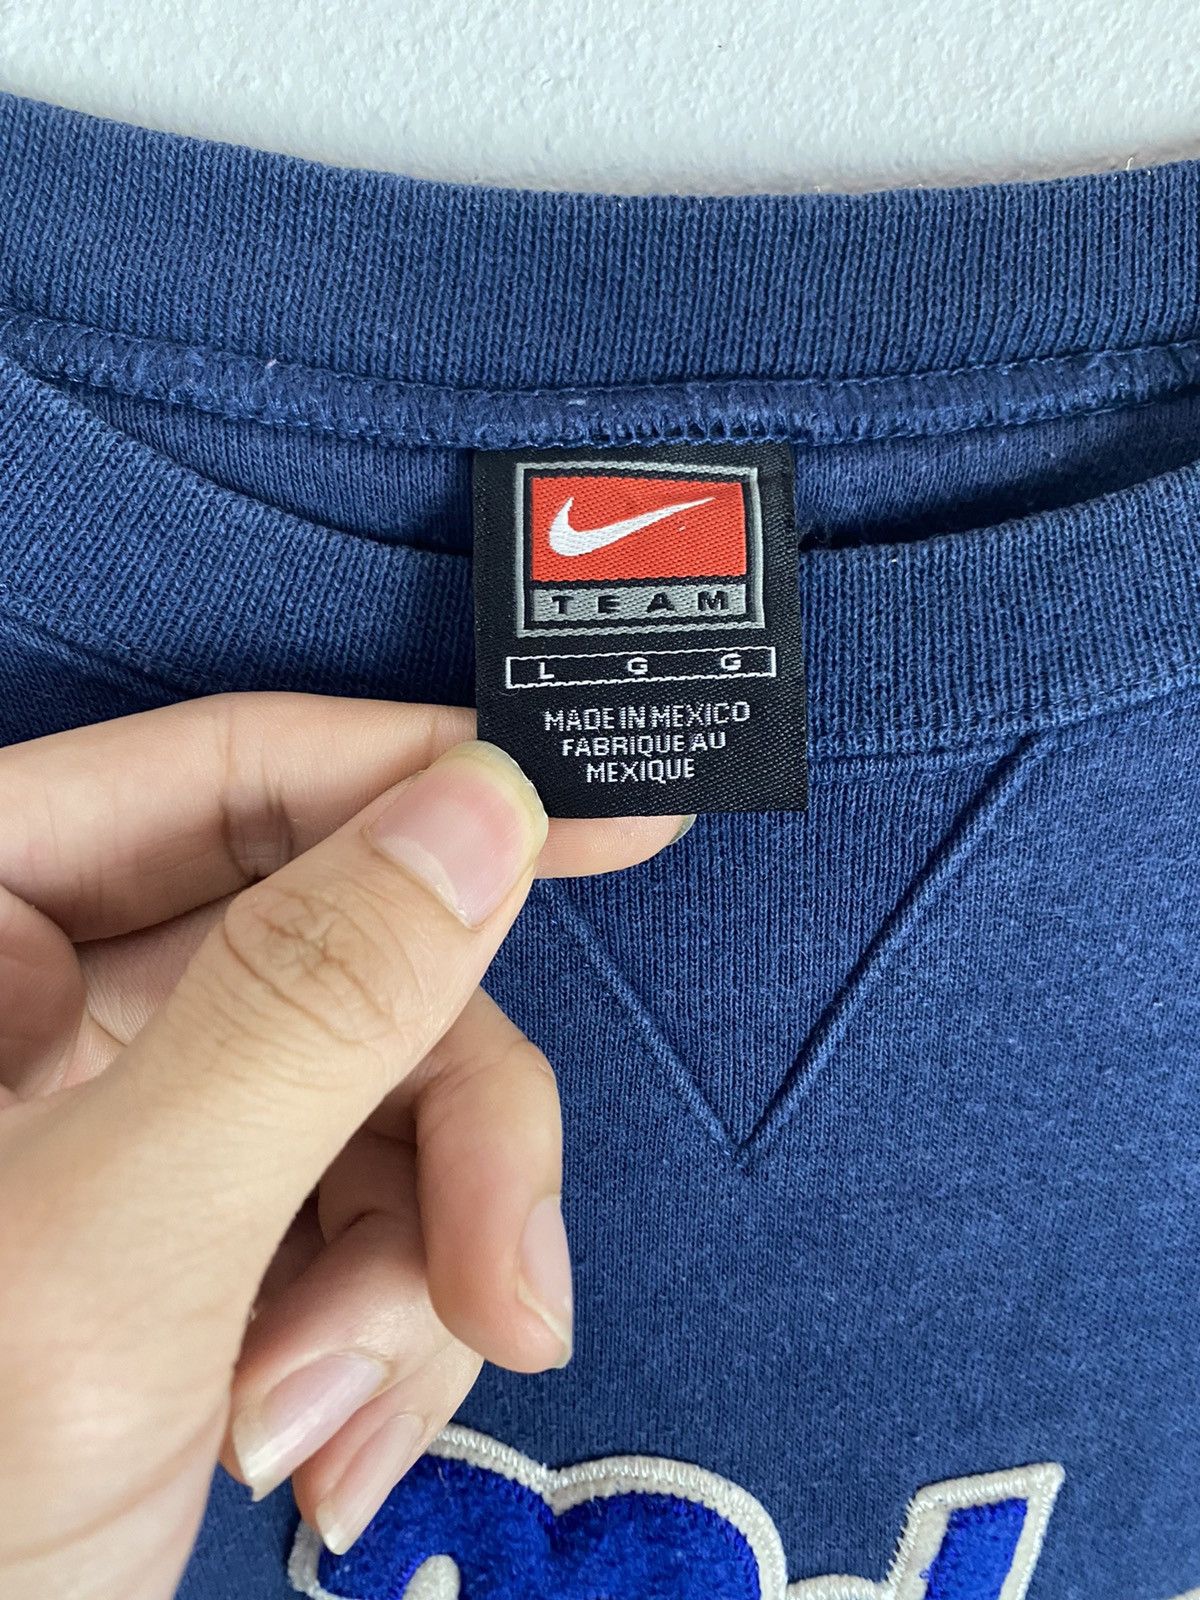 Nike Vintage Nike Spell Out Sweatshirt Size US L / EU 52-54 / 3 - 3 Thumbnail